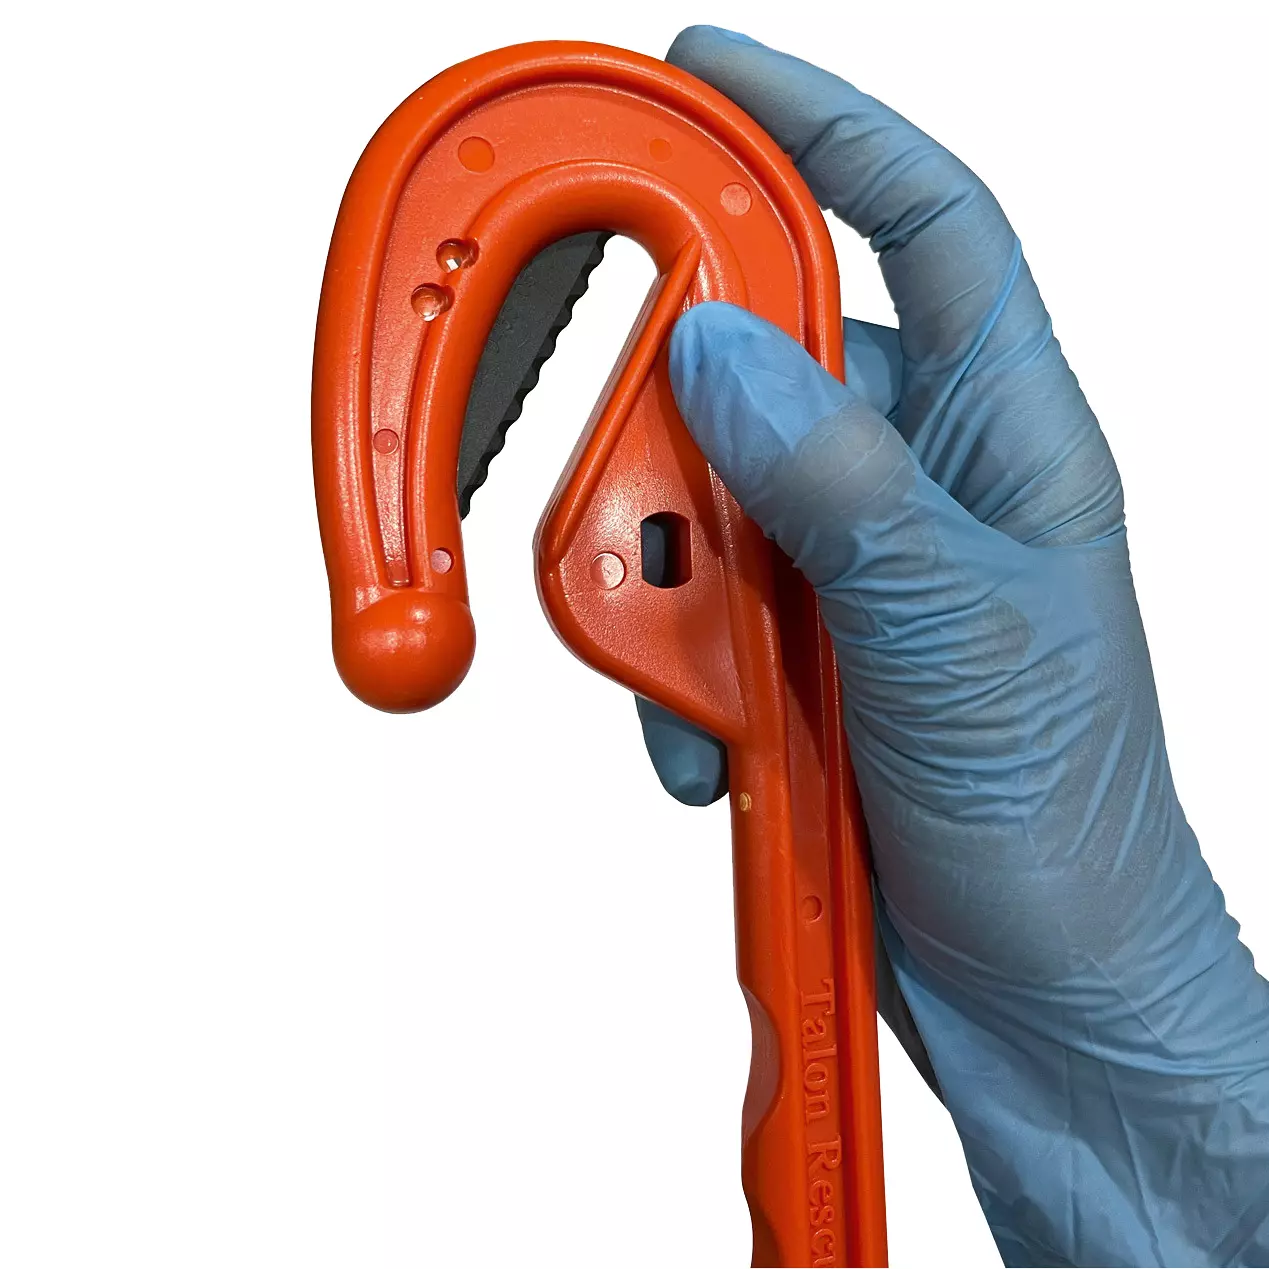 Emergency cutting tool TRECK (Talon Rescue Emergency Clothing Knife)